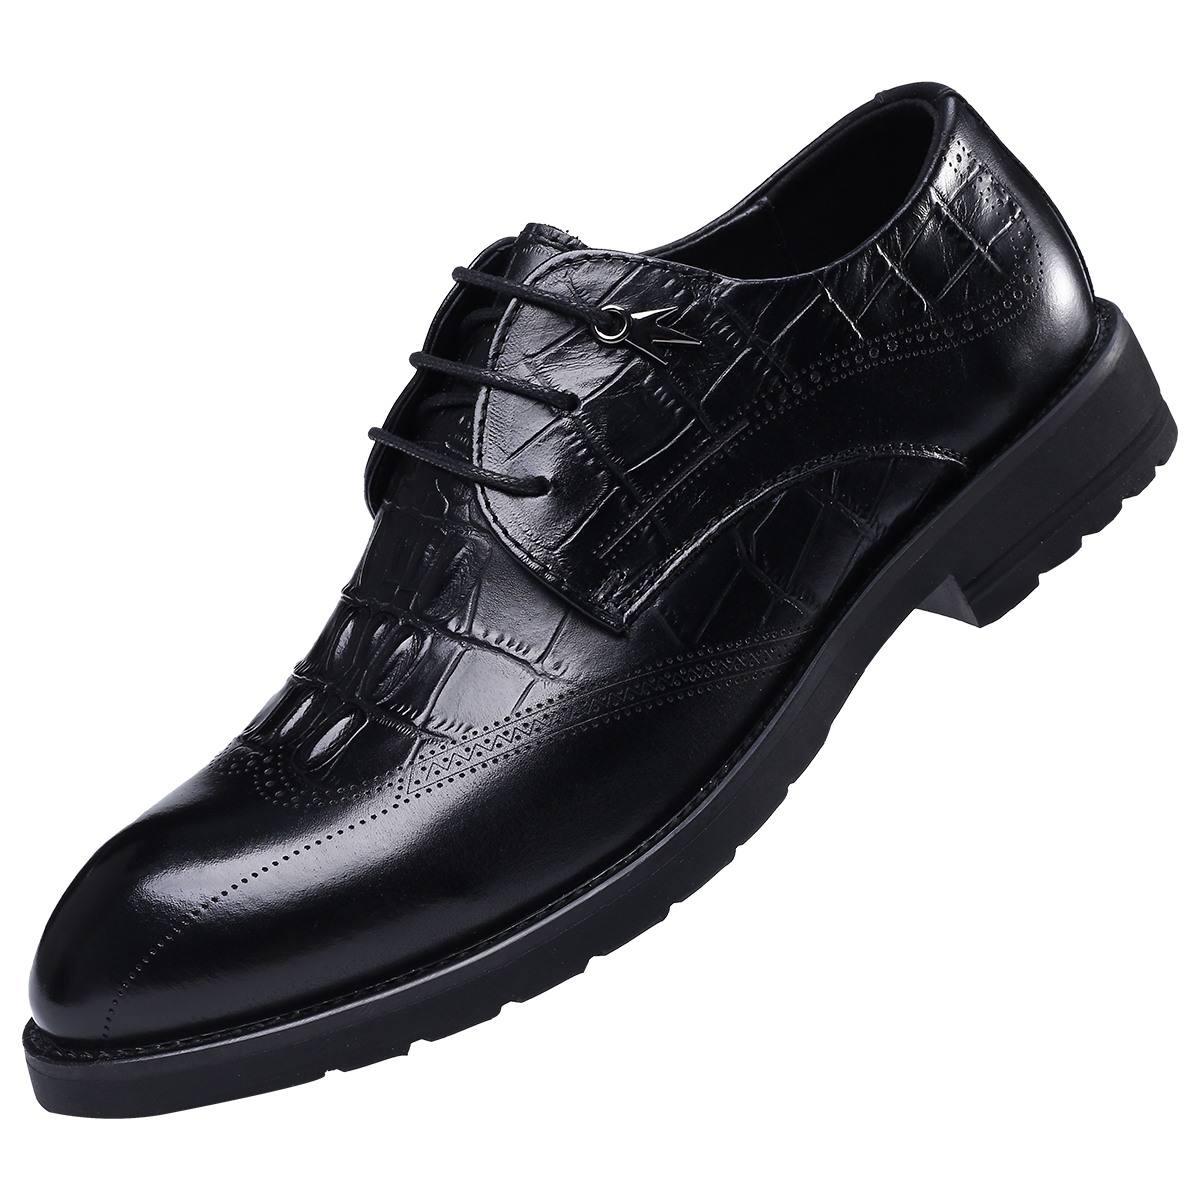 wholesale OEM ODM stock shoes business dress mens shoes classic British lace up factory direct sale dress shoes